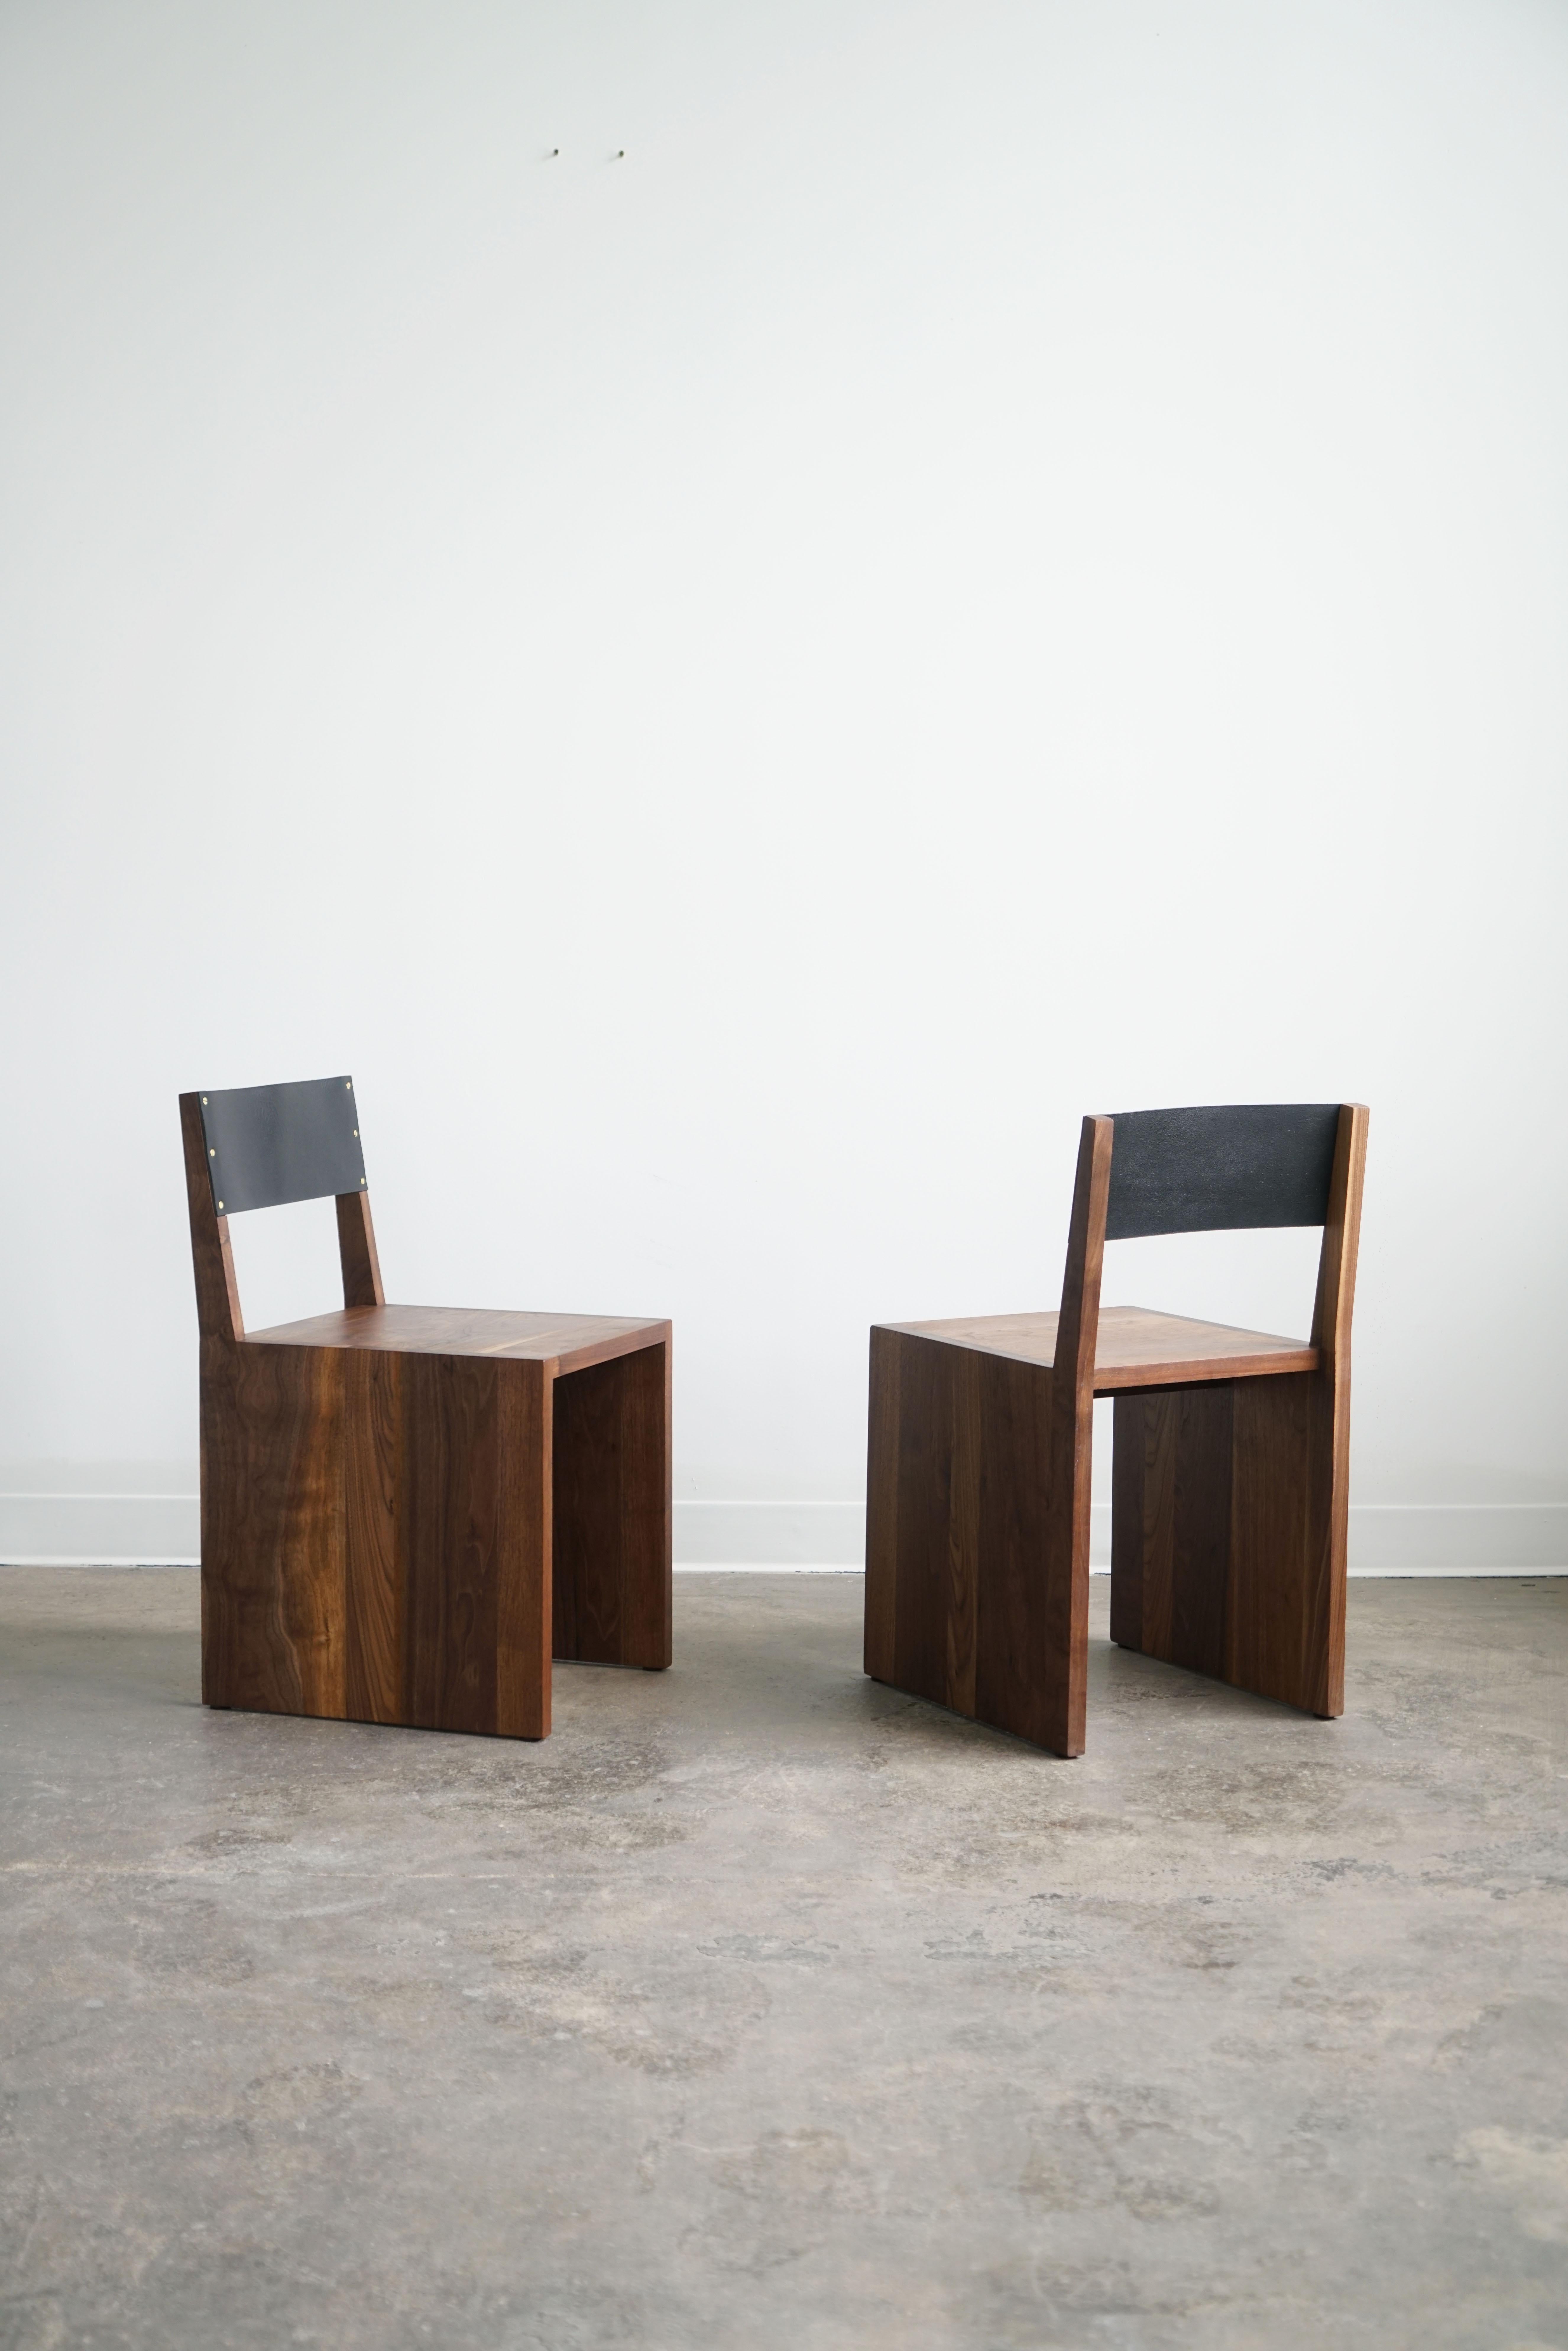 Minimalist Lake Street Chairs in Walnut by Last Workshop, 2021 For Sale